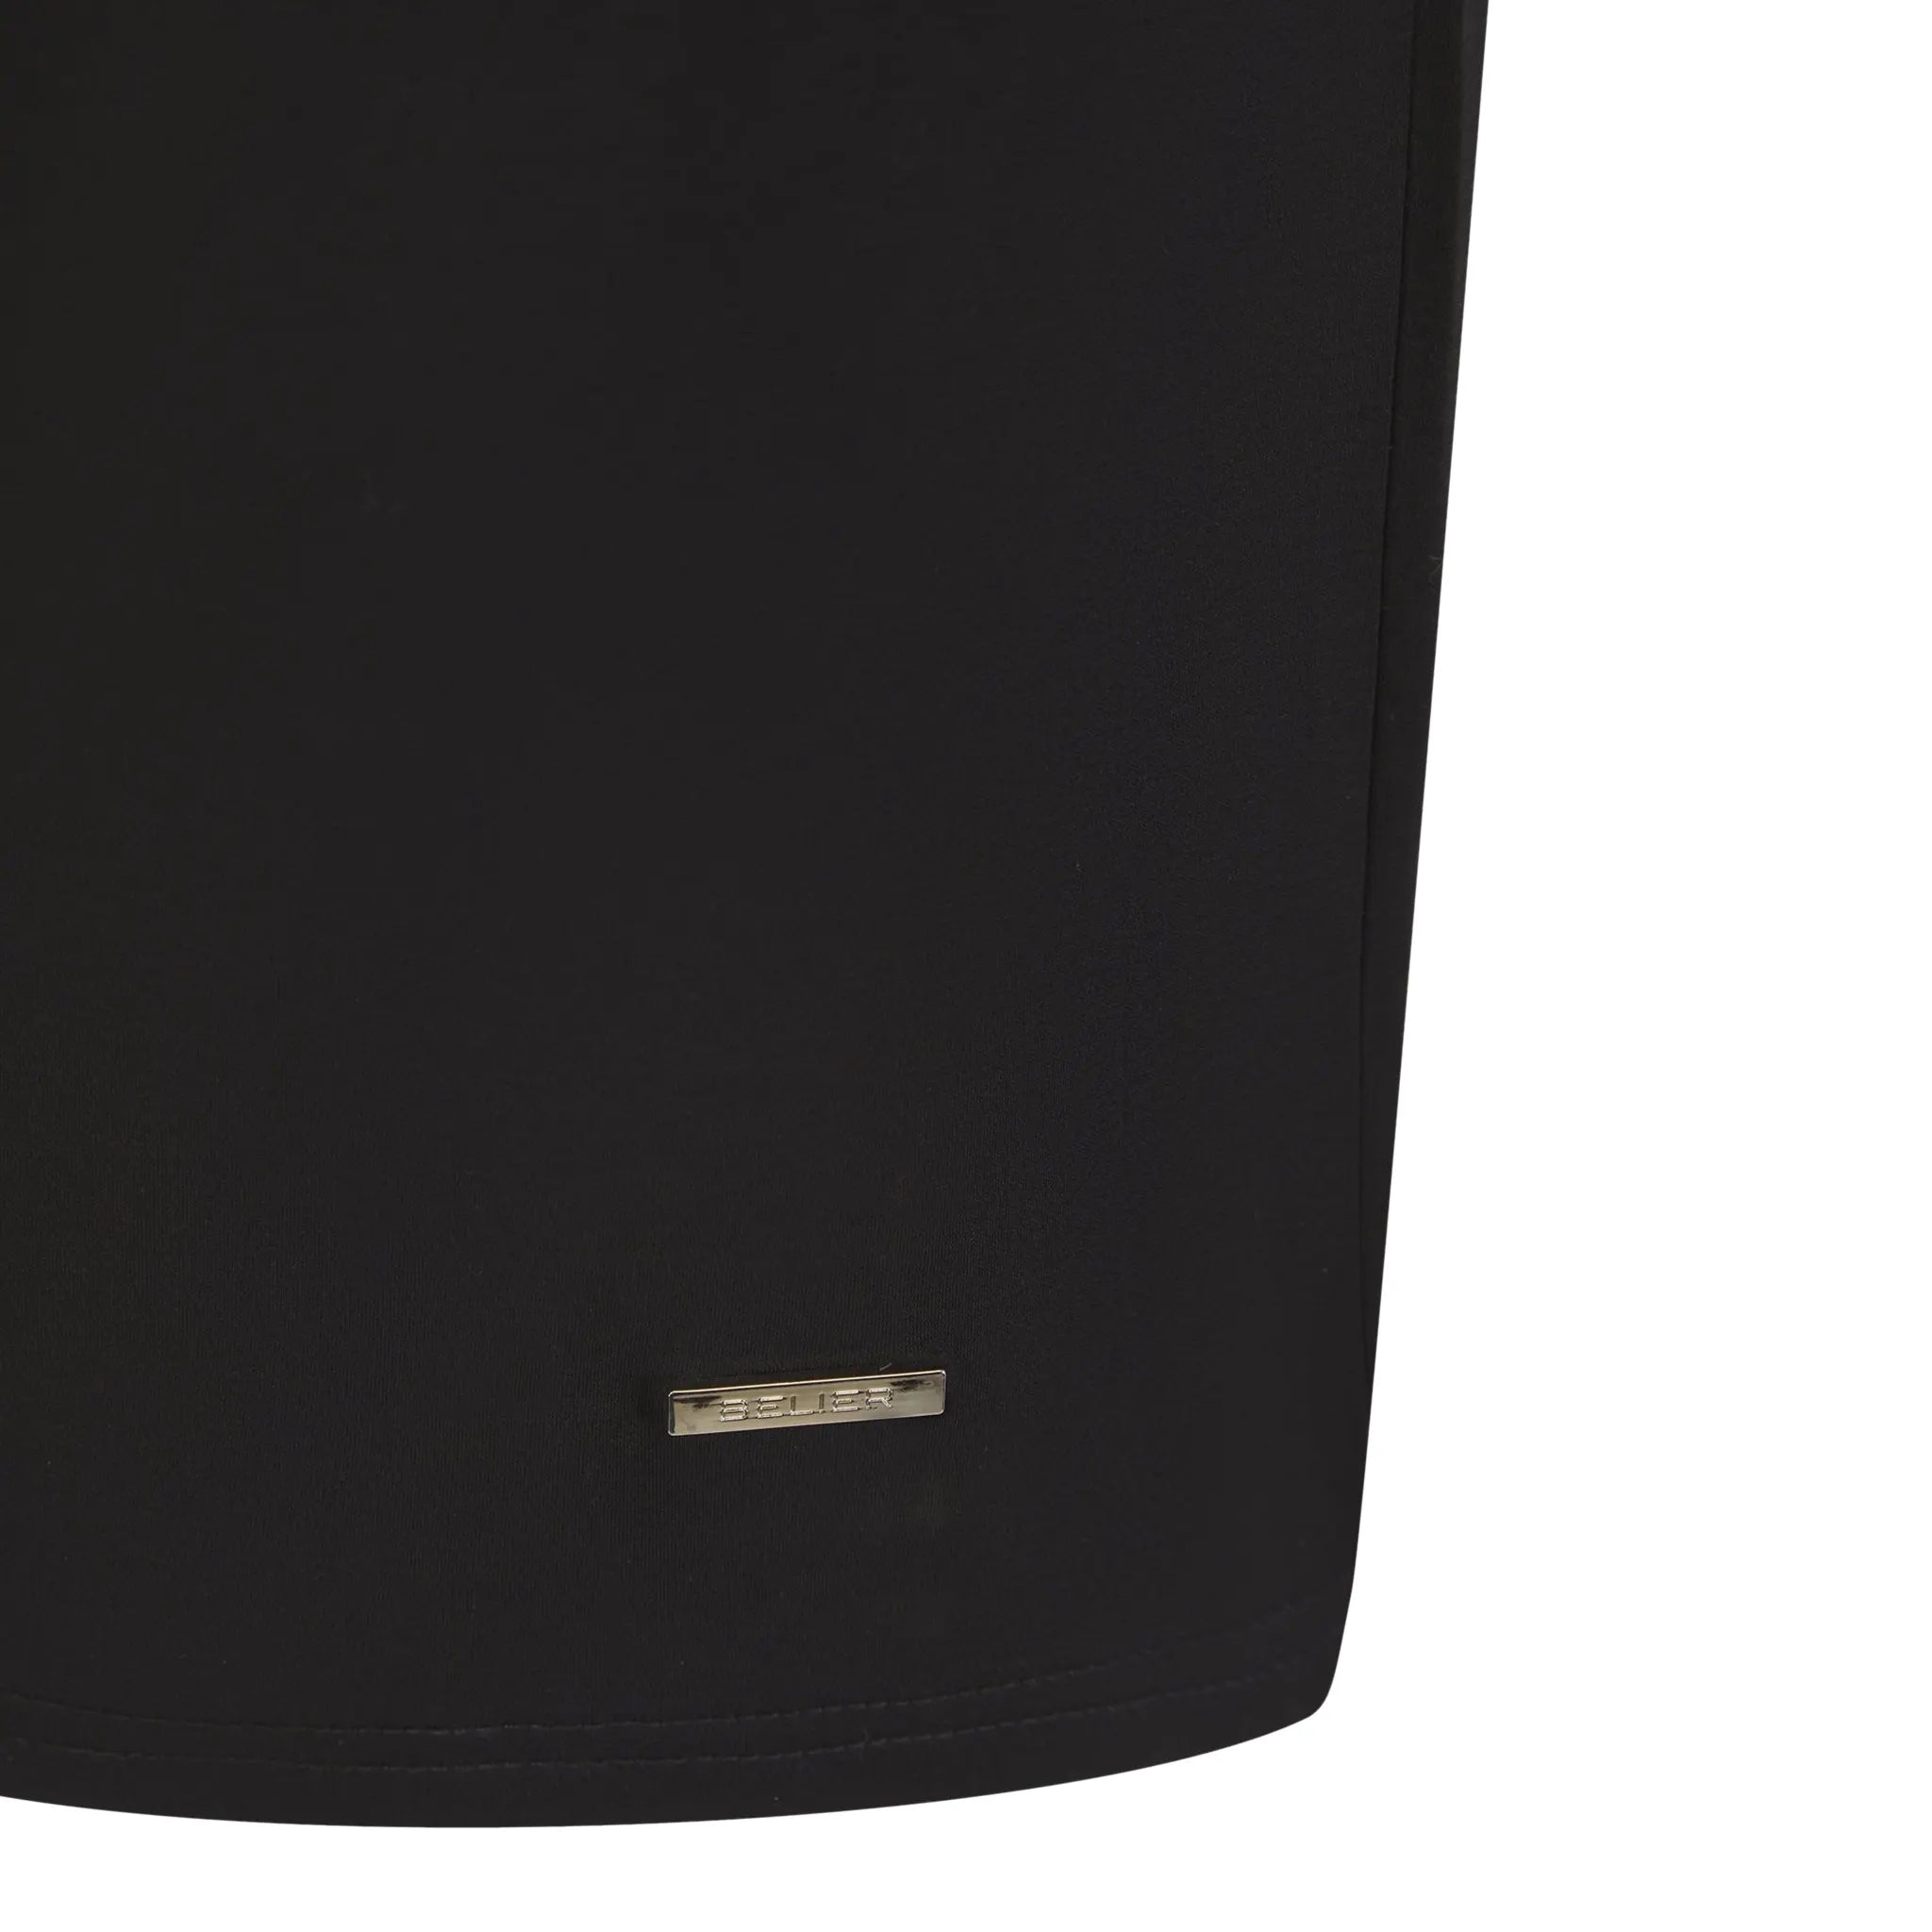 Detail view of Belier Mercerised Cotton Short Sleeve Premium Black T Shirt BM-125